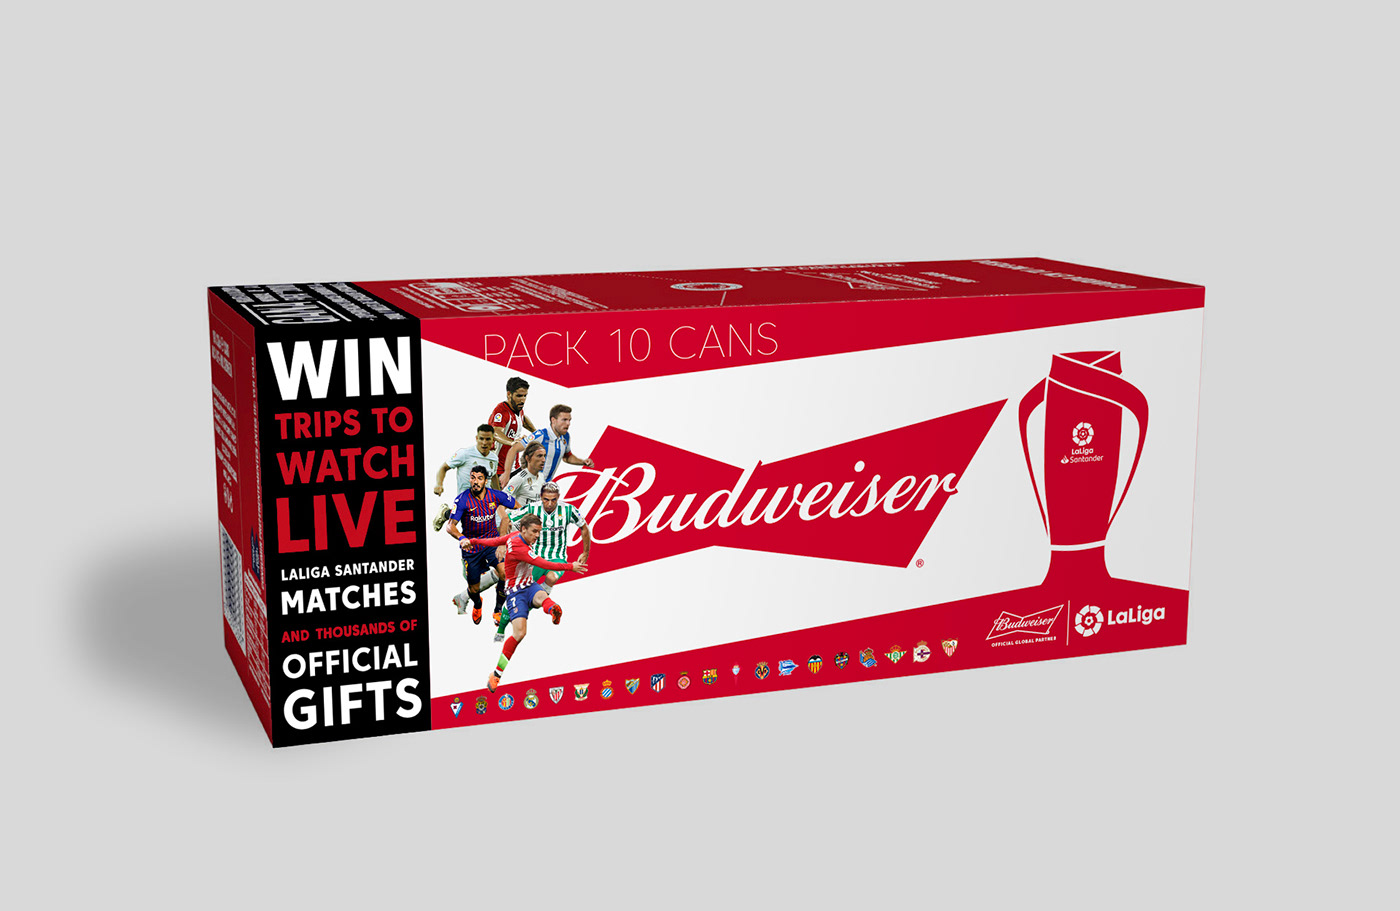 Packaging beer cerveza Budweiser laliga bottle Pack caja merchandising botellin